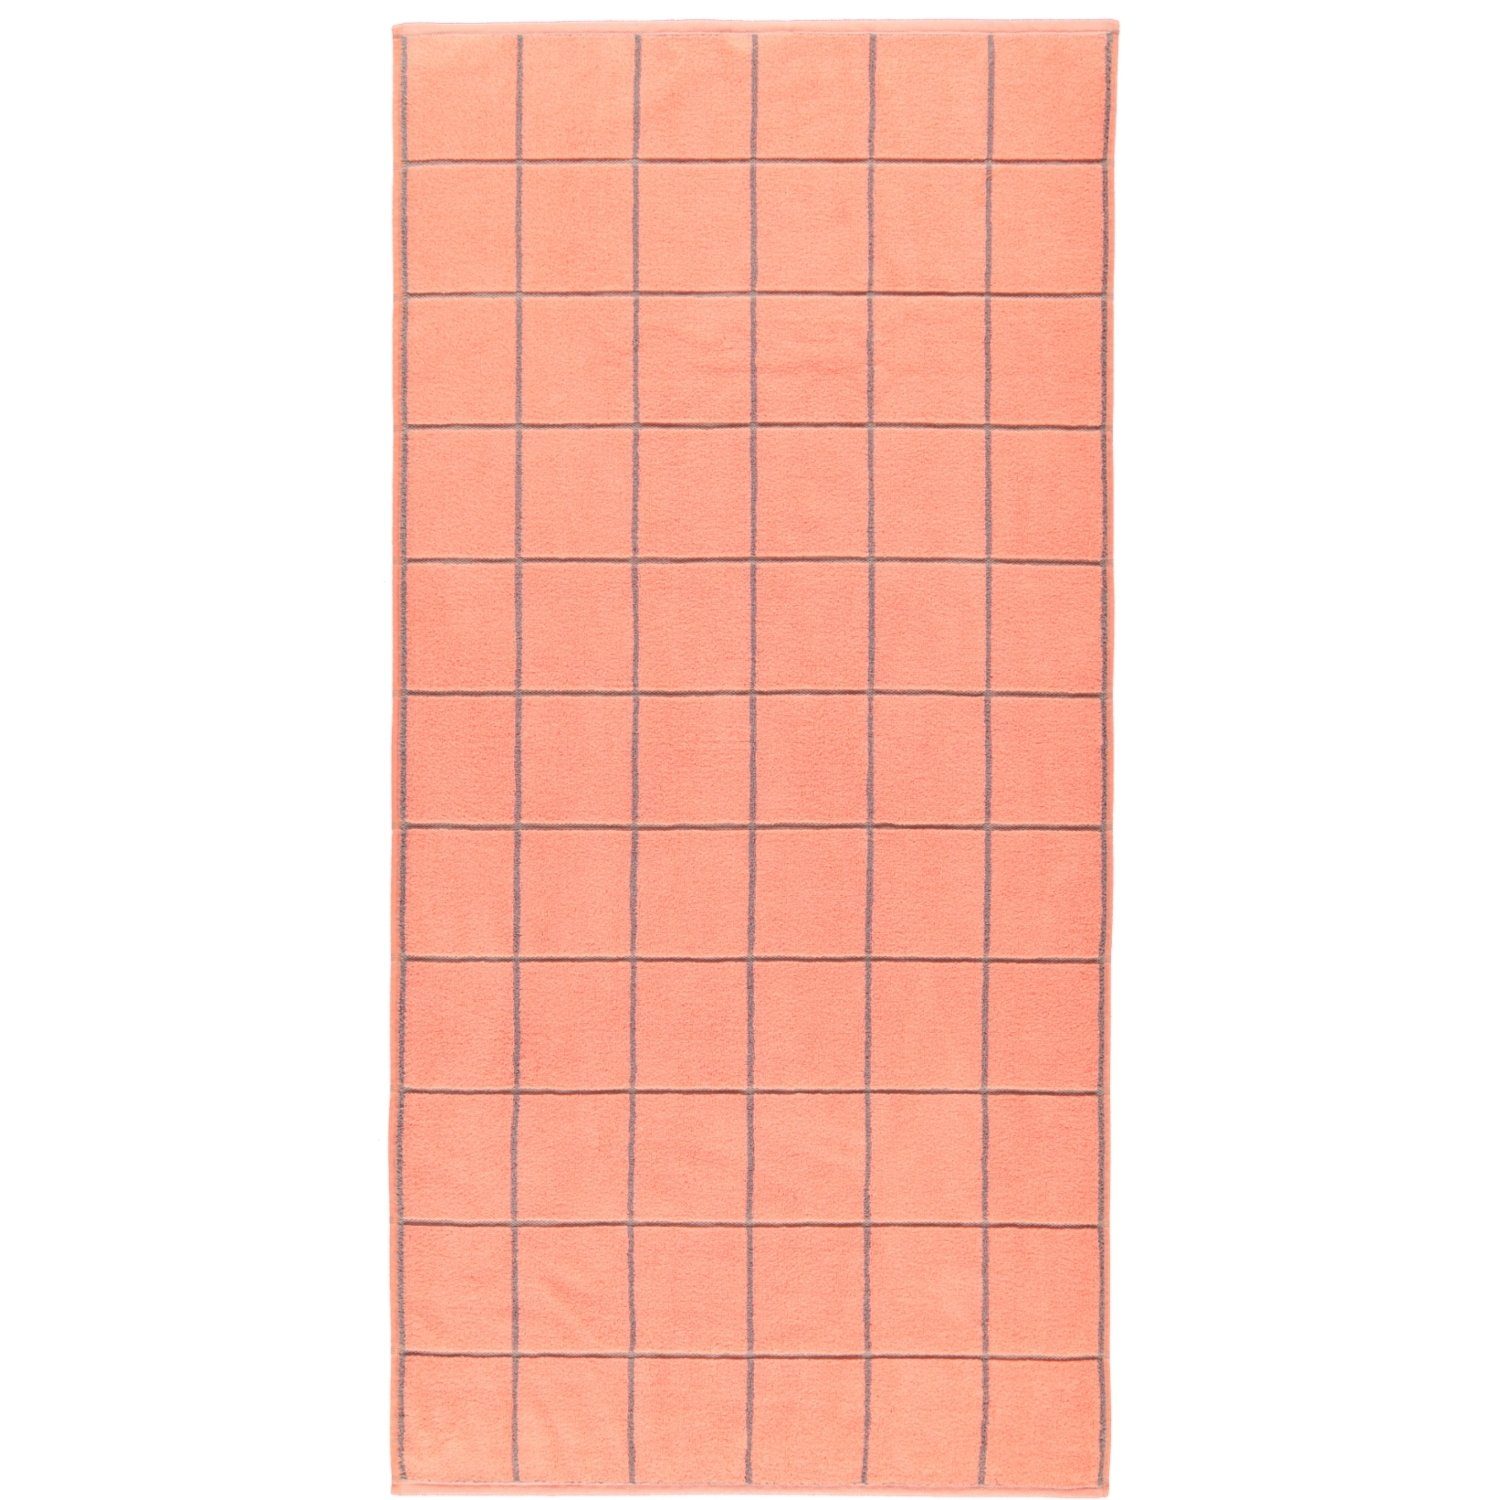 ROSS Handtücher Überkaro peach Baumwolle 9032, pink 100